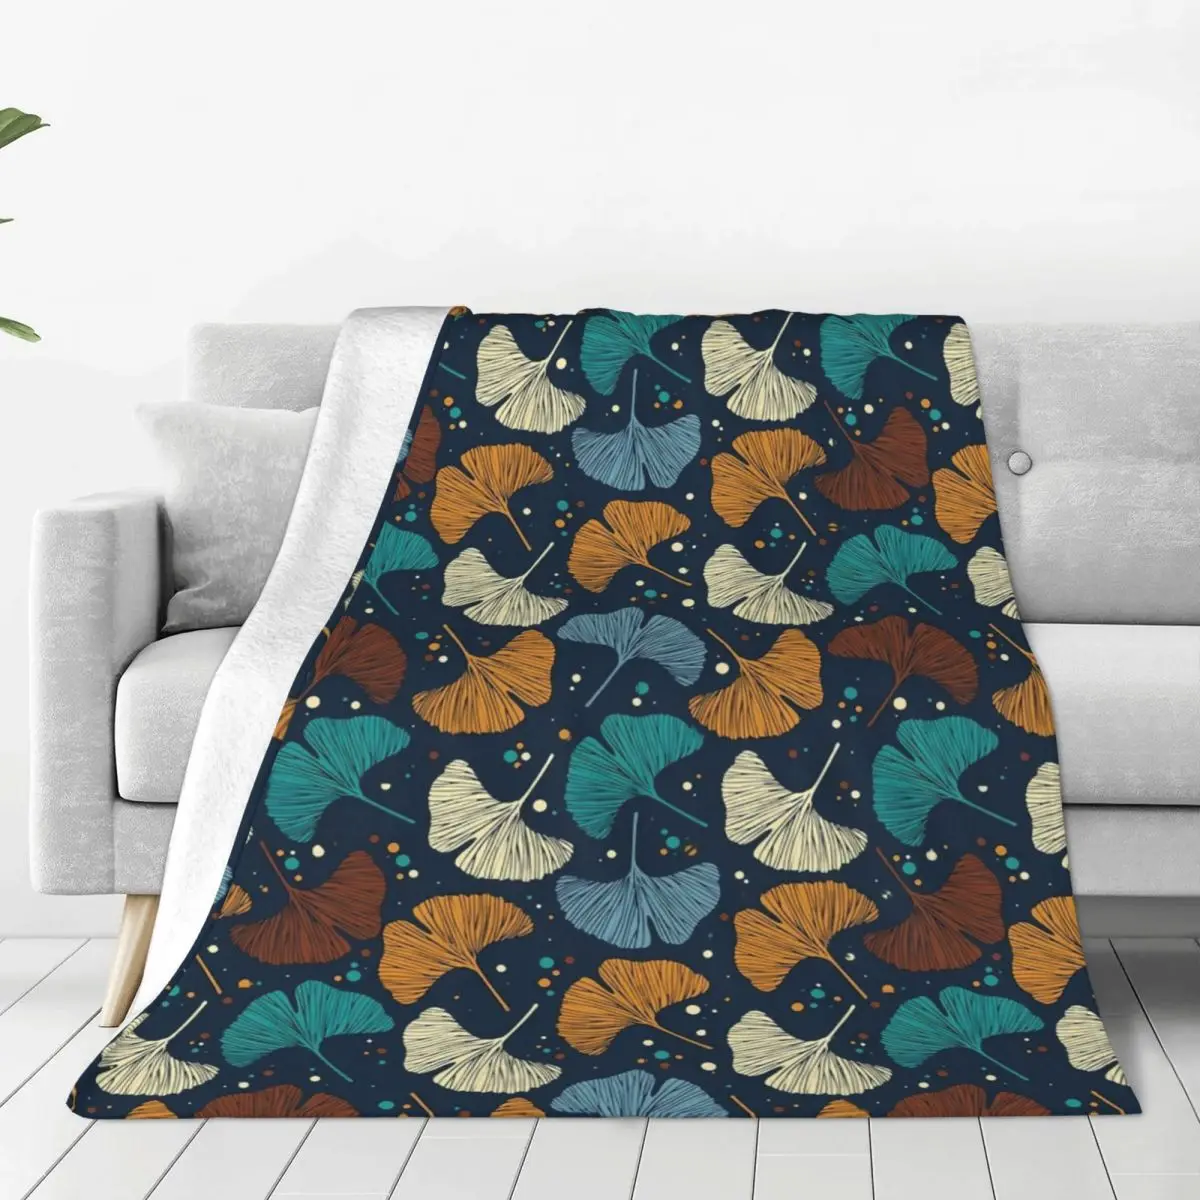 

Ginkgo Biloba Flannel Blanket Super Warm Colorful Leaves Print Bedding Throws Winter Travel Office Bedroom Novelty Bedspread